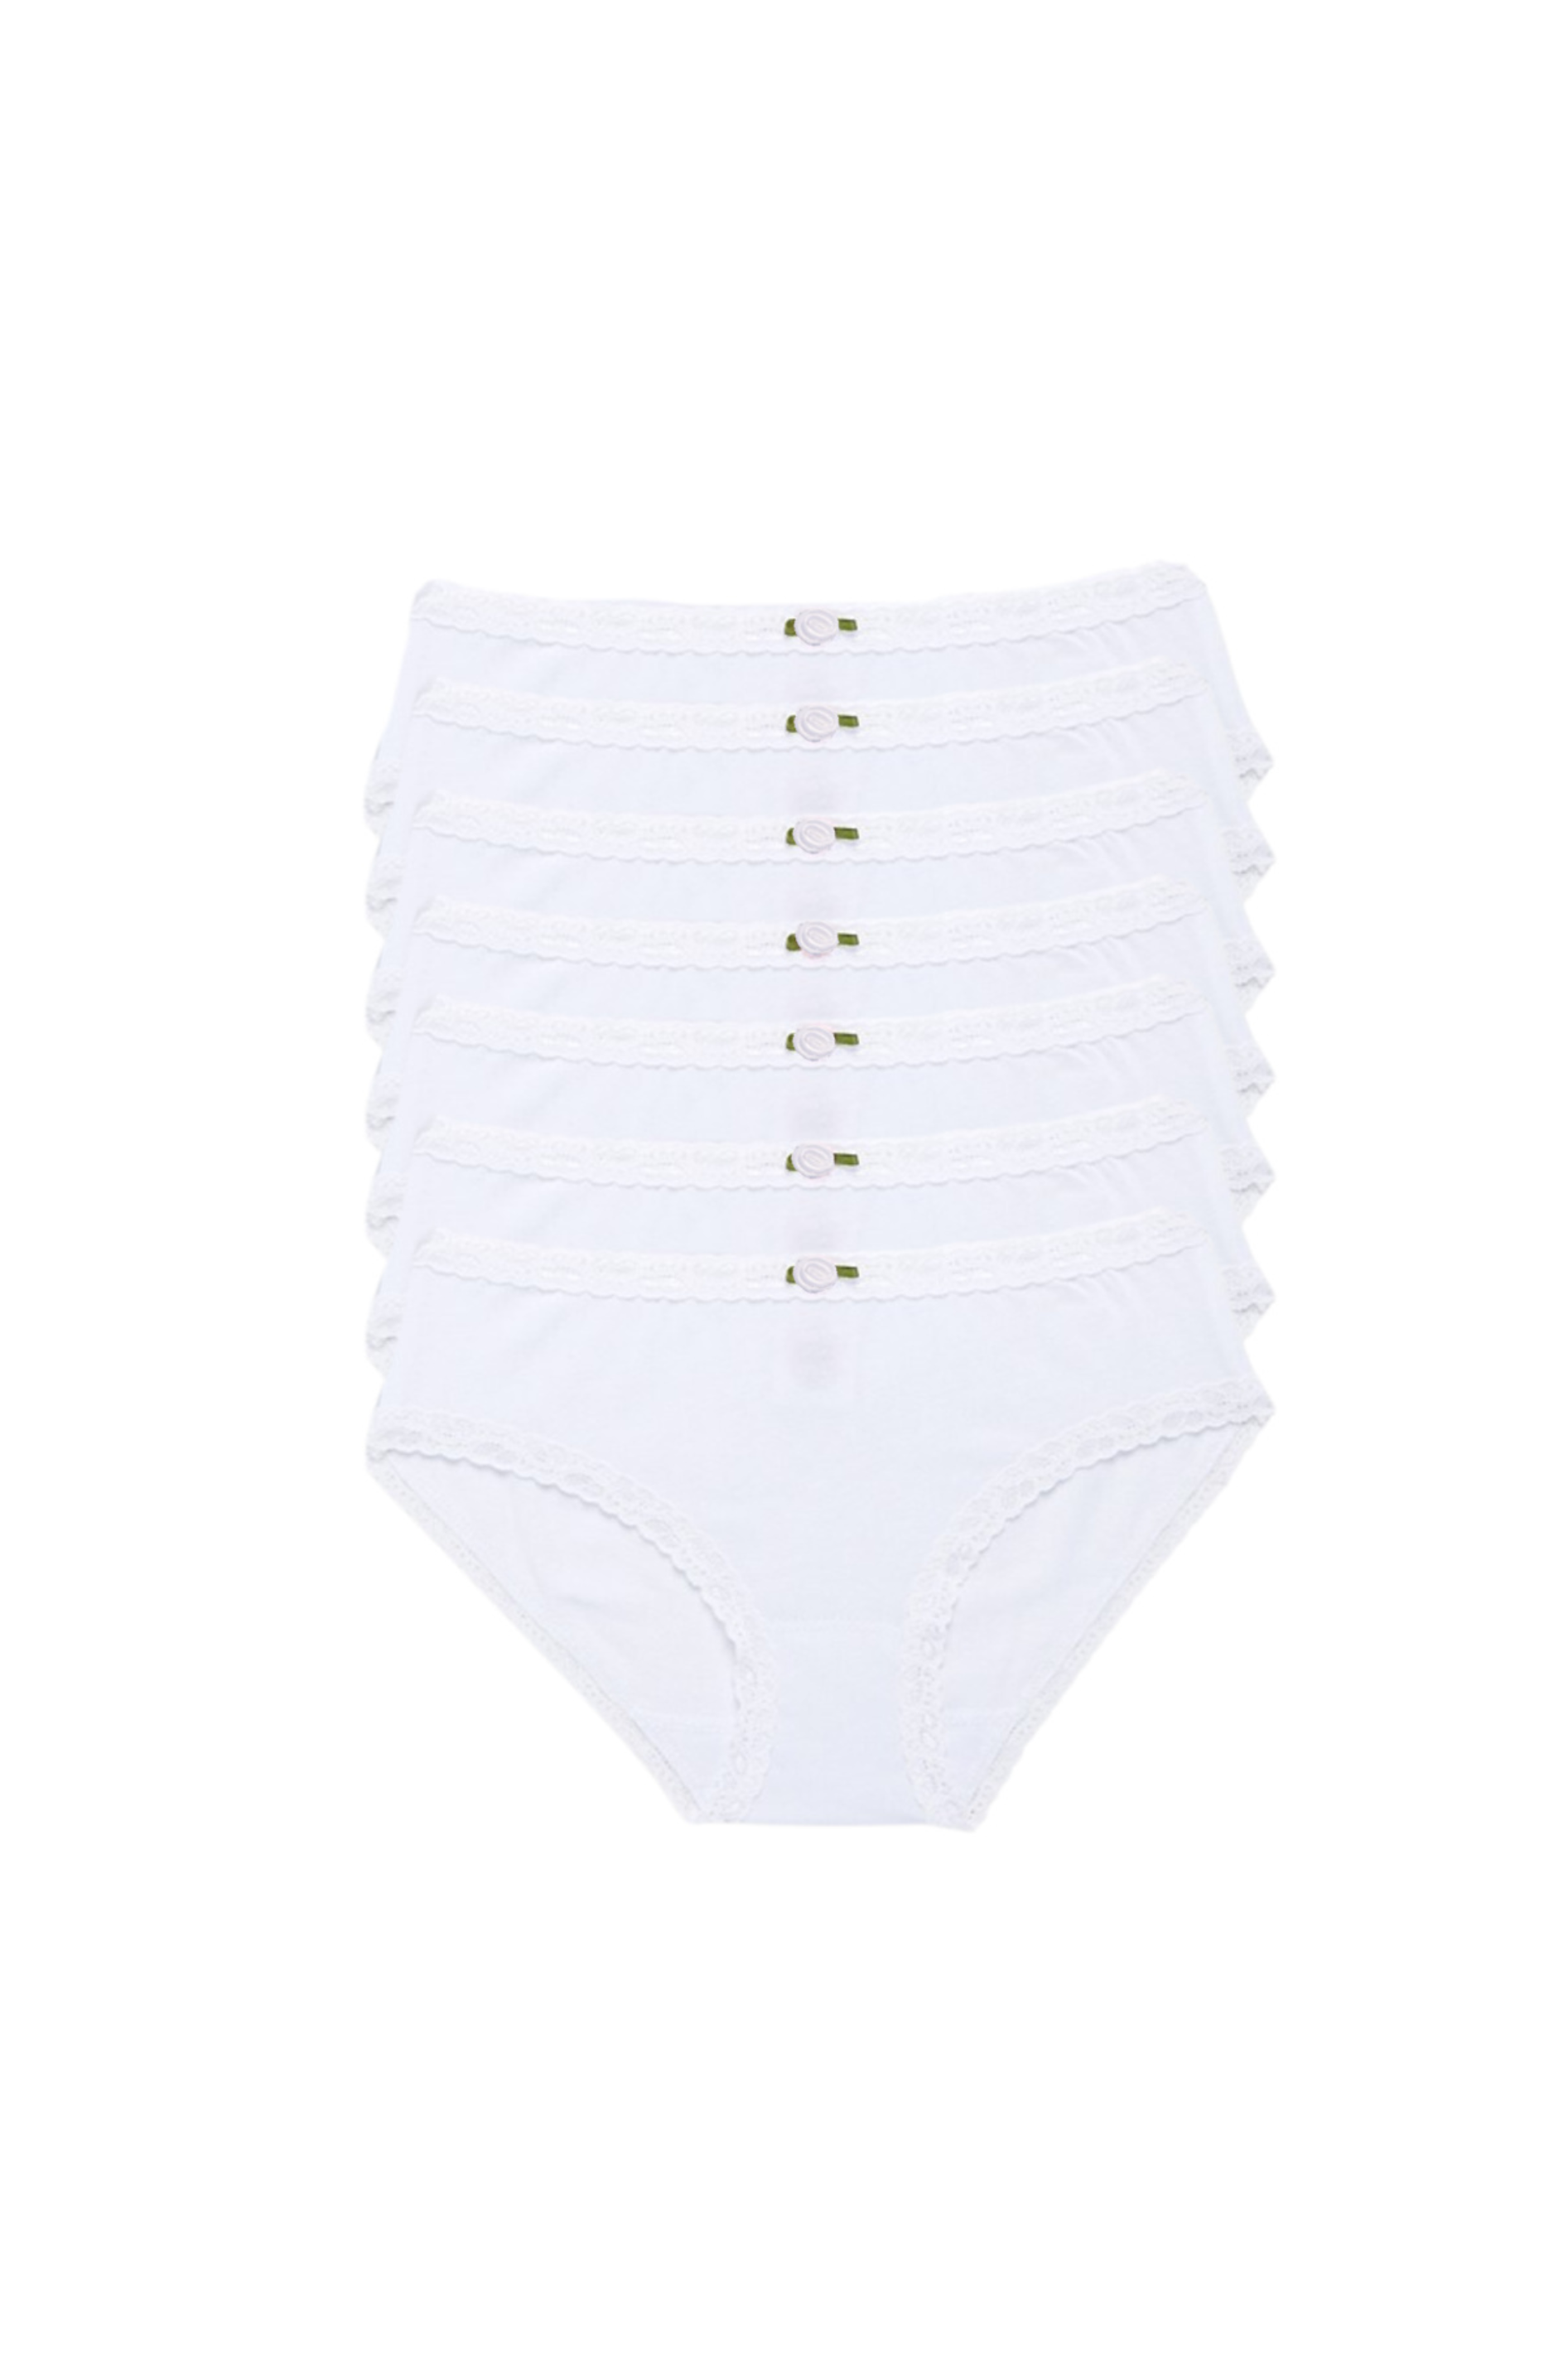 Esme - 7 Day White Panty Pack (2-6X) – Dottie Doolittle